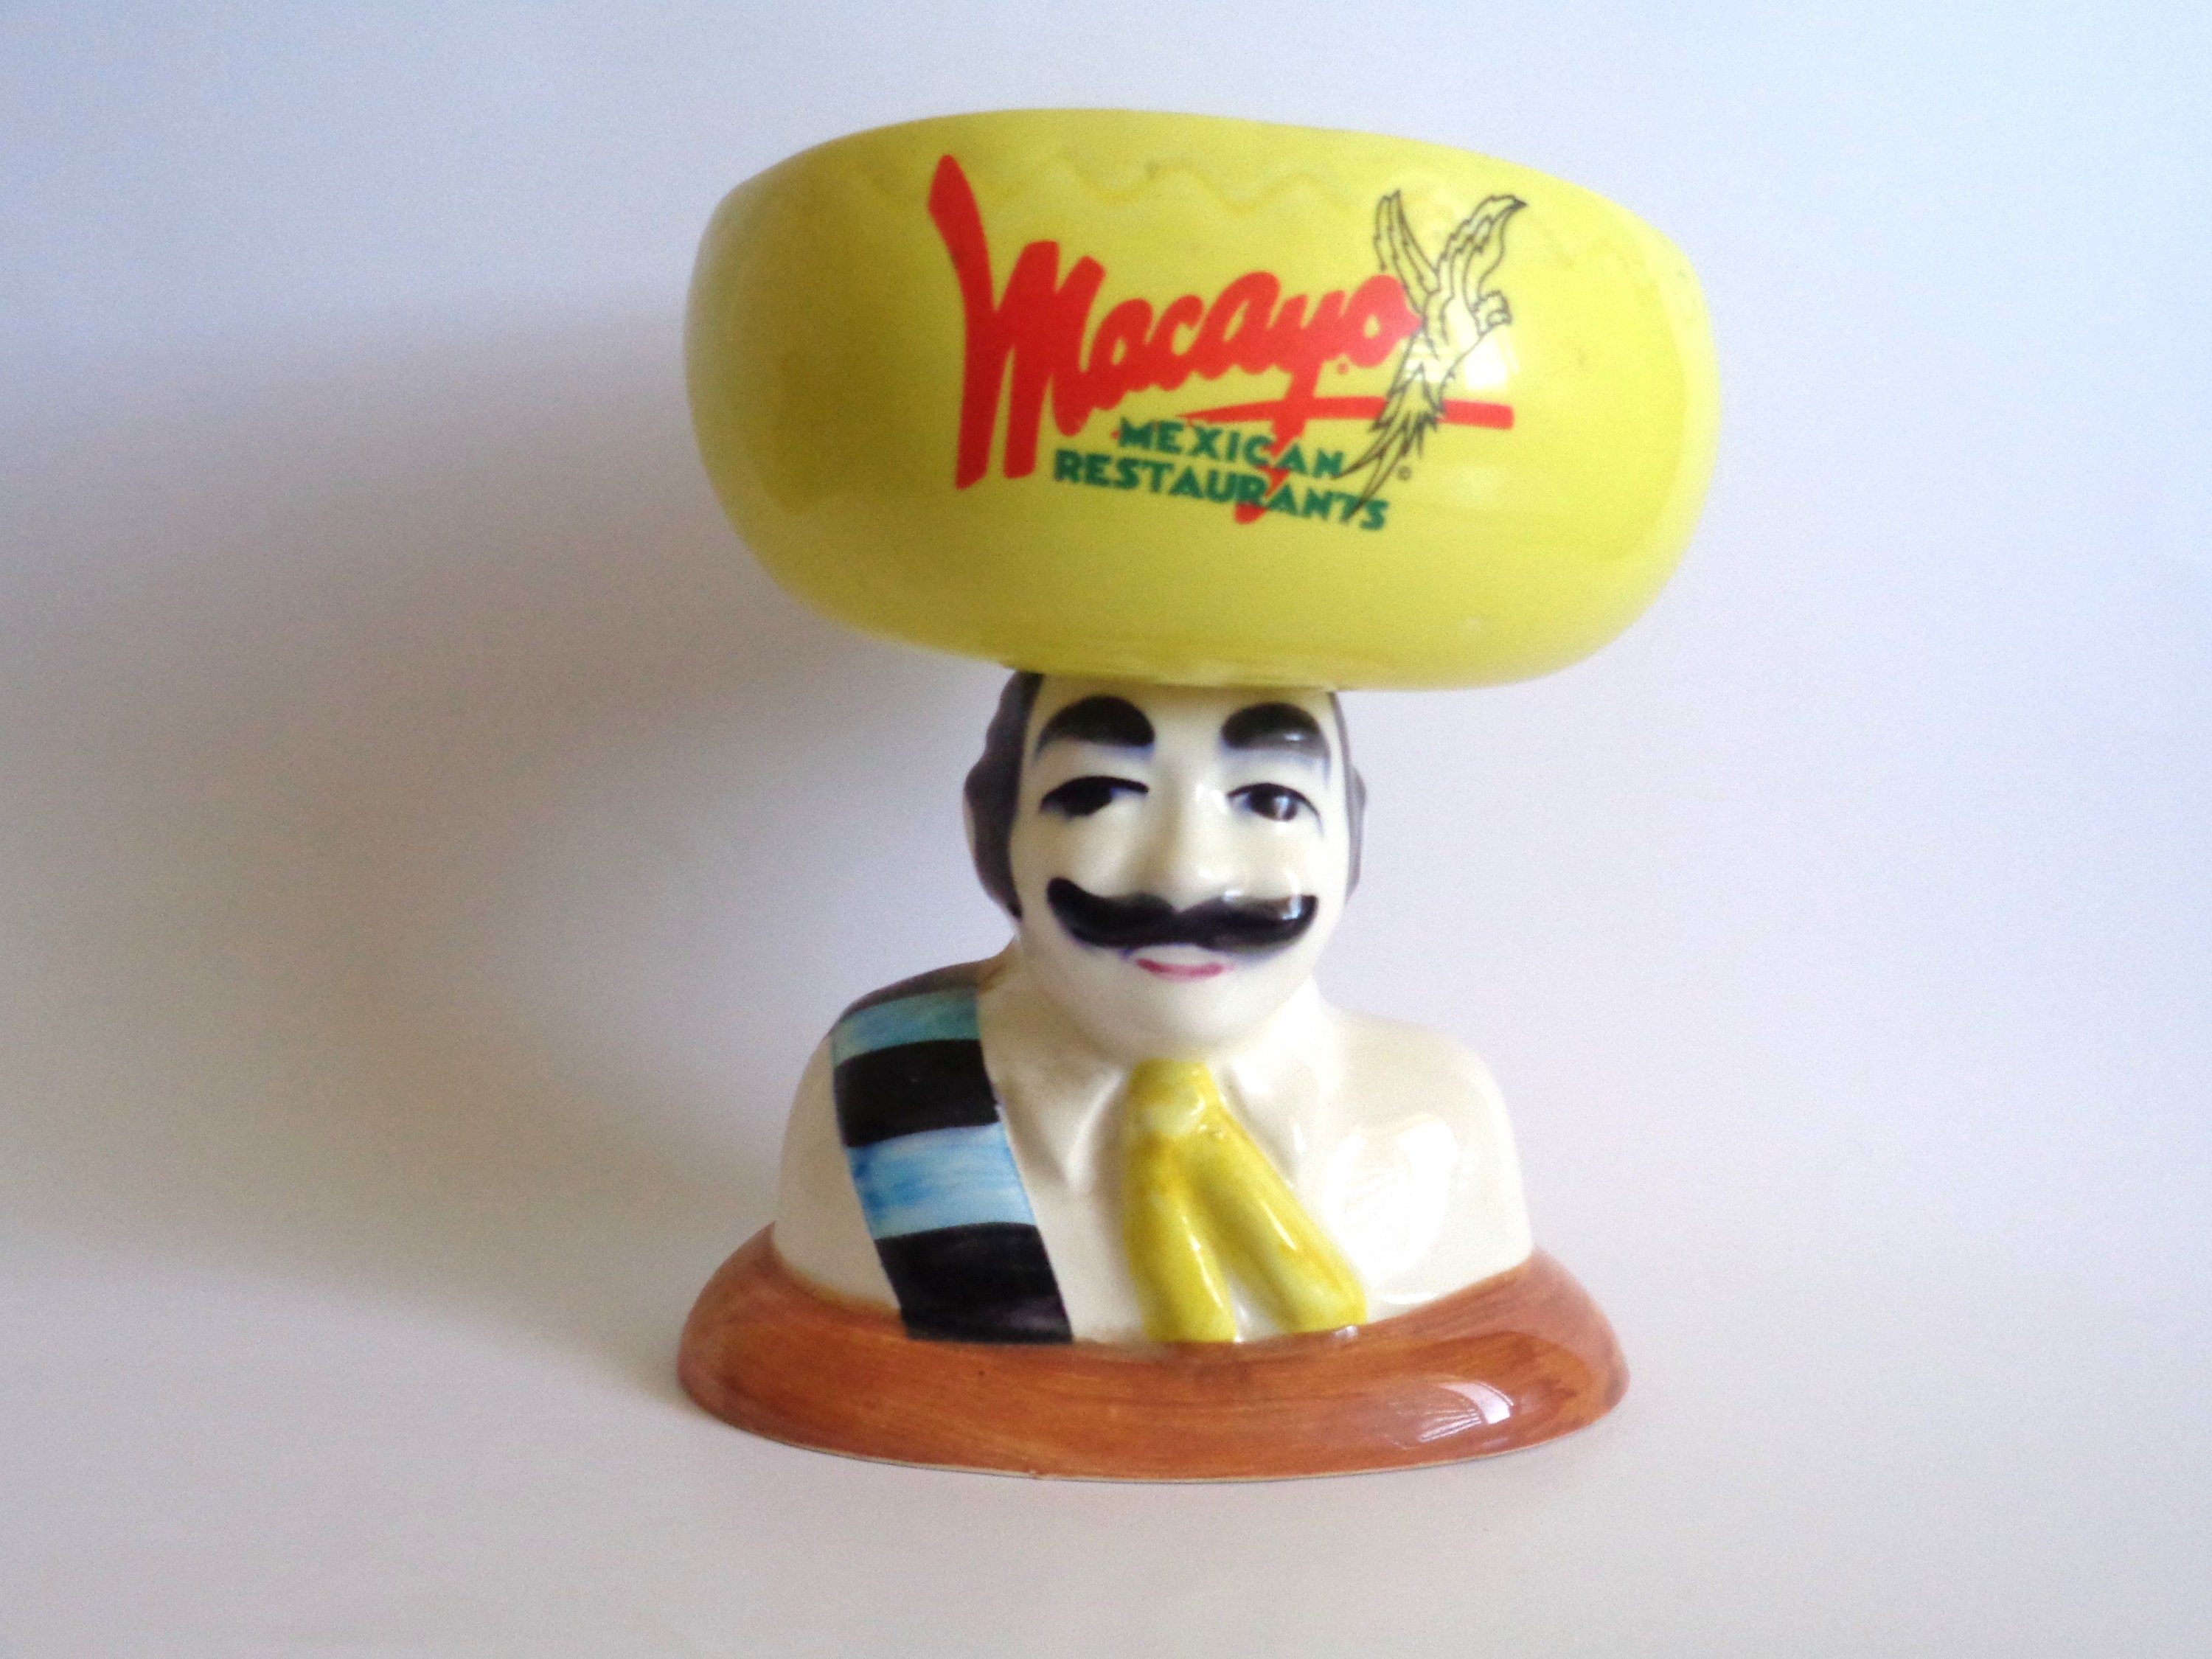 Set of Macayo's Margarita Glasses – Macayo's Mexican Food